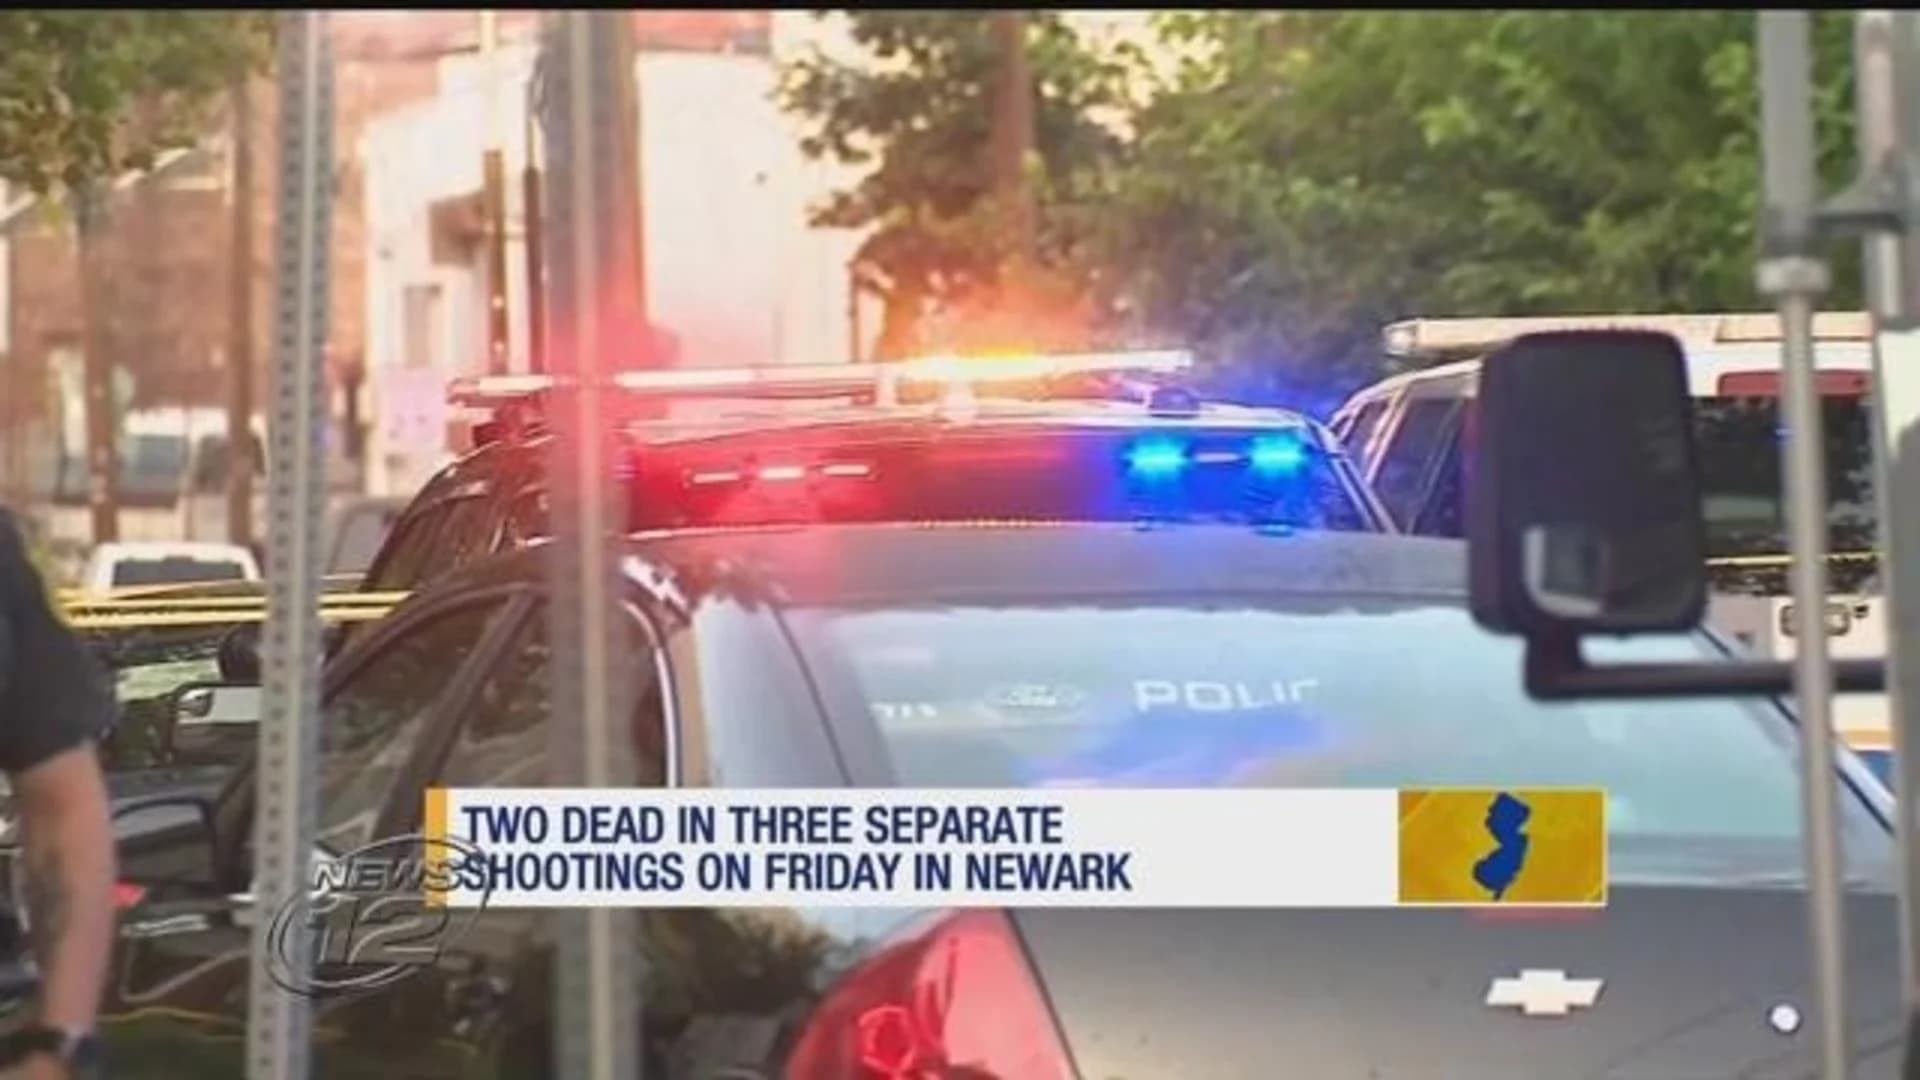 Officials: 3 separate shootings leave 2 dead in Newark